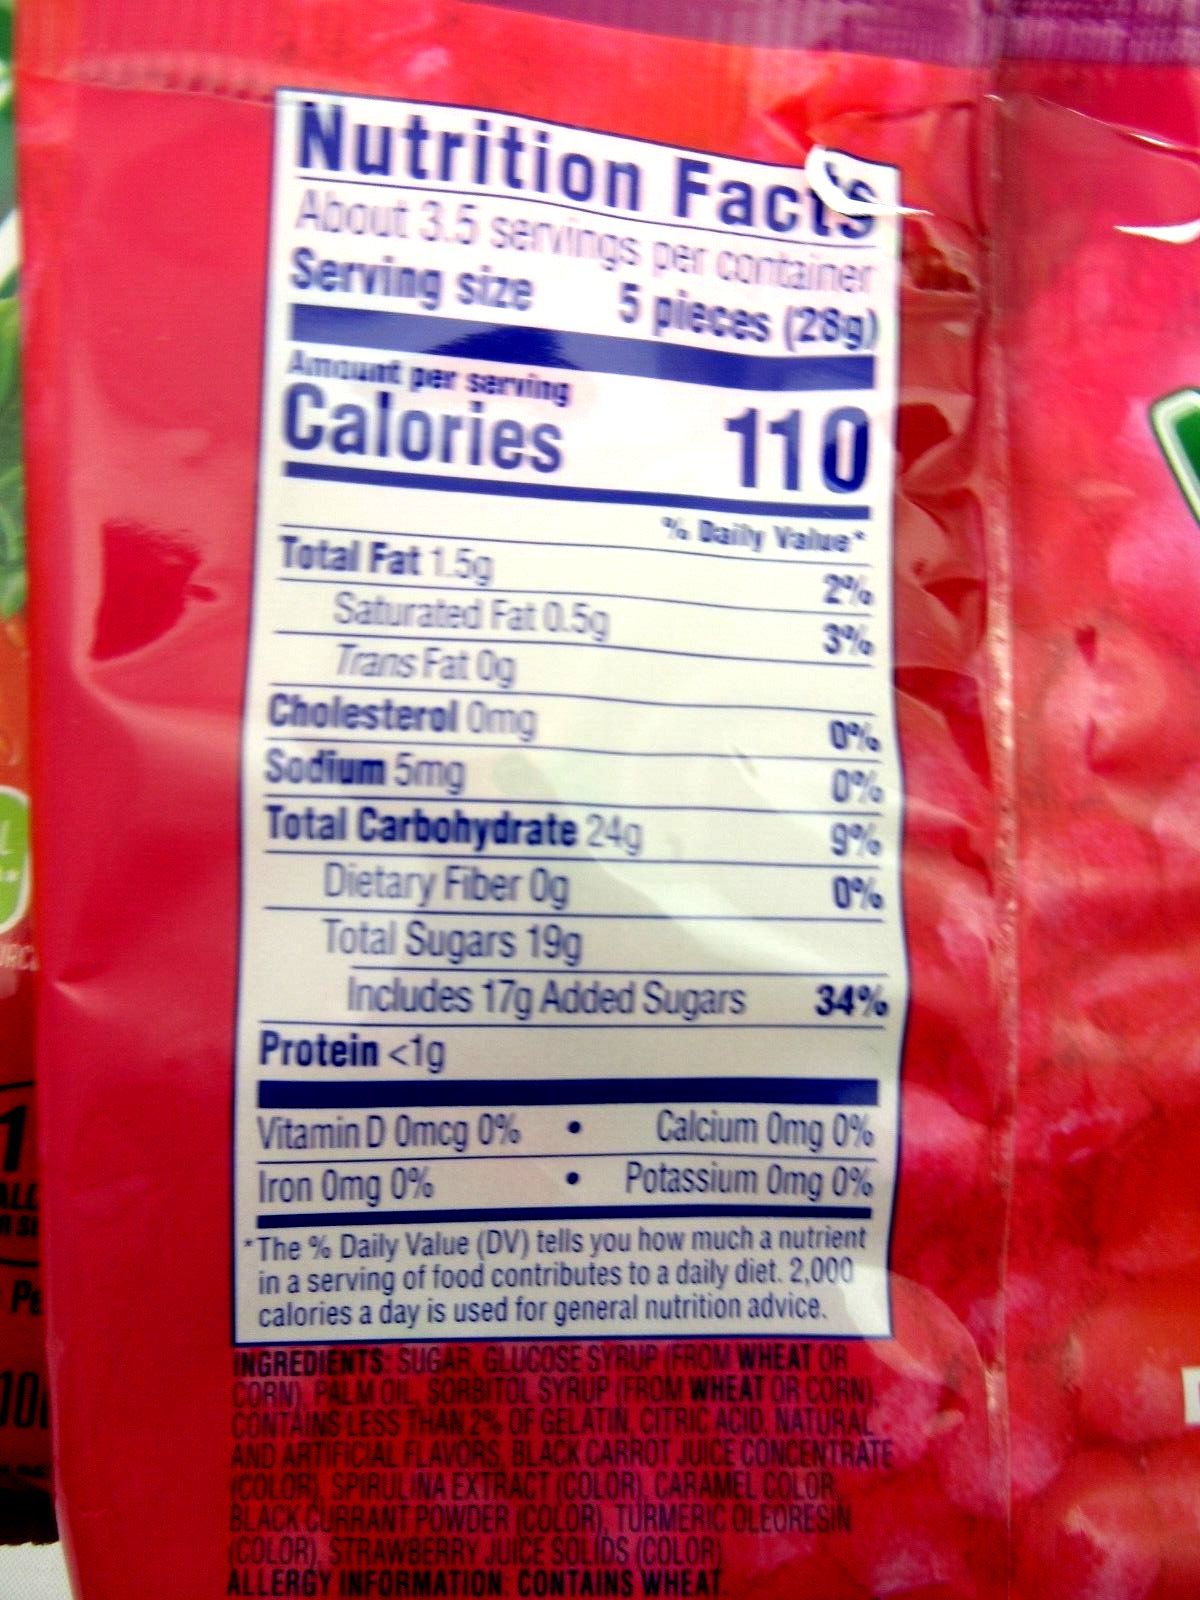 Mamba Berry Tasty Fruit Chews ~ American Candy 3.52oz Bag Lot of 2